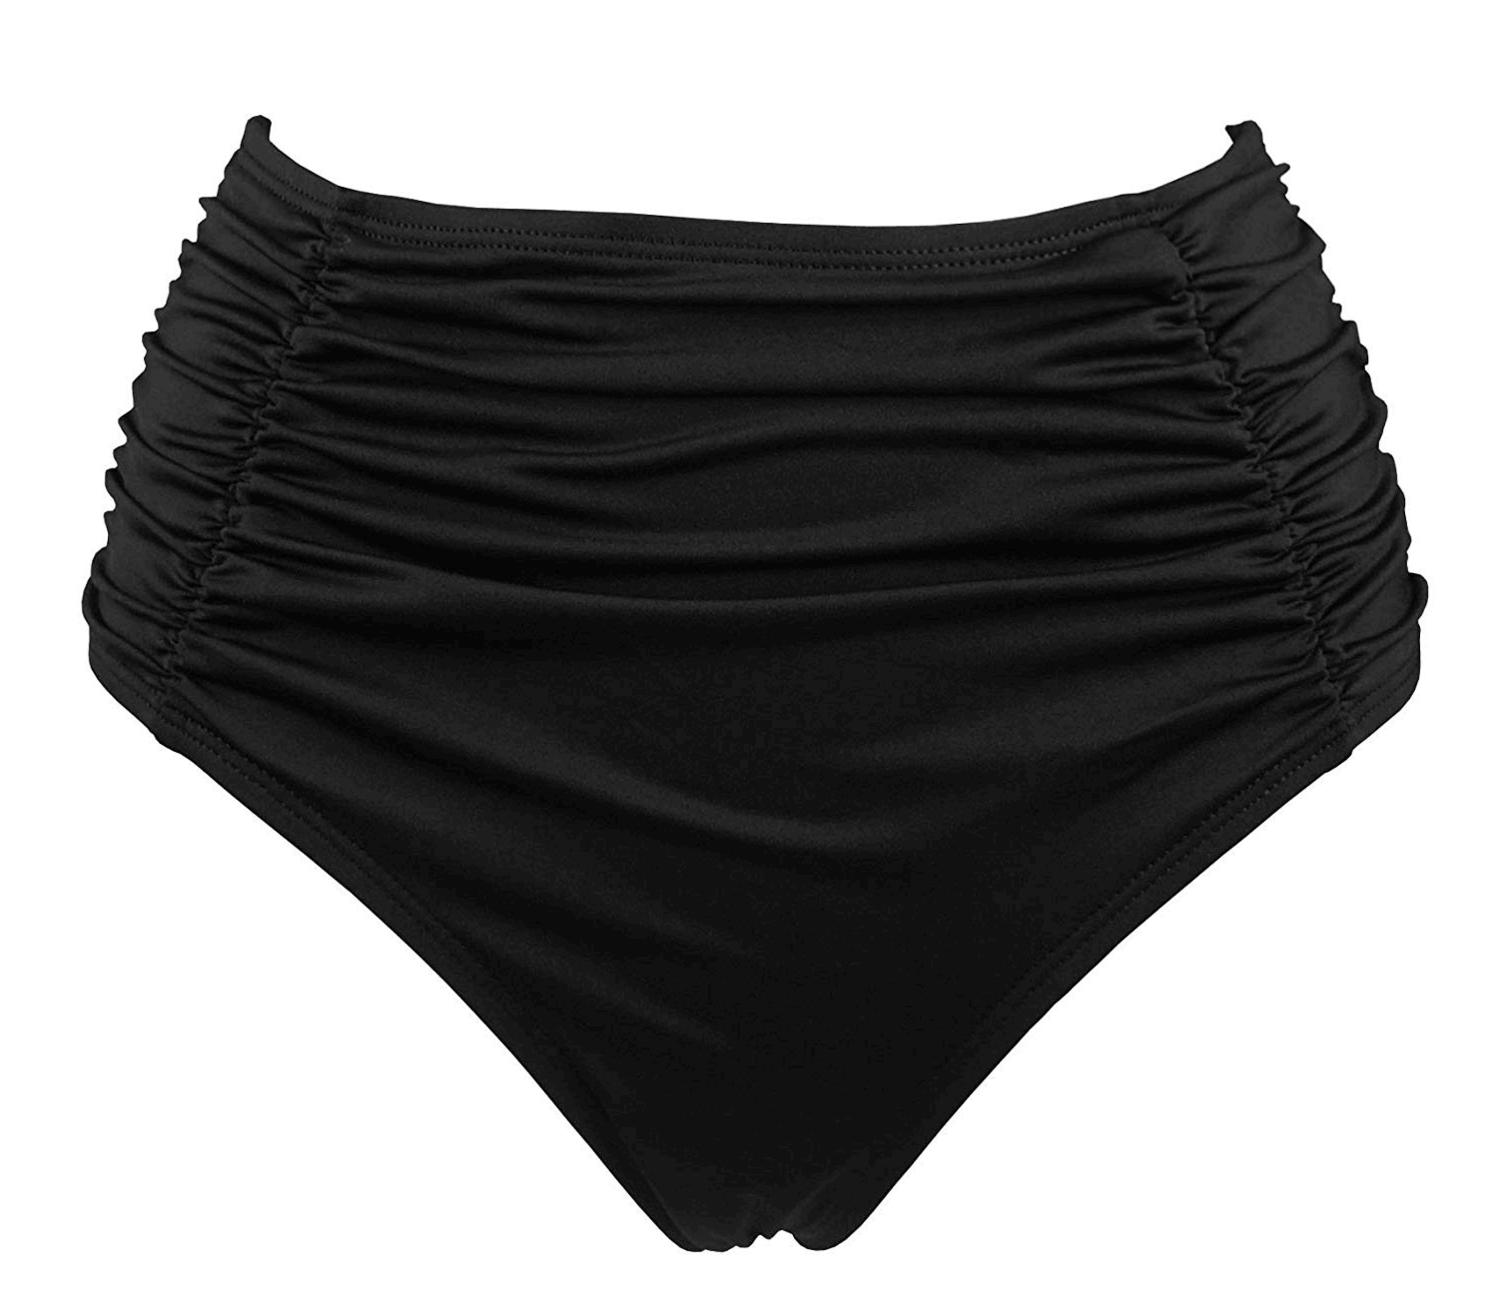 Cocoship Black Women S Retro High Waisted Bikini Bottom Black Size